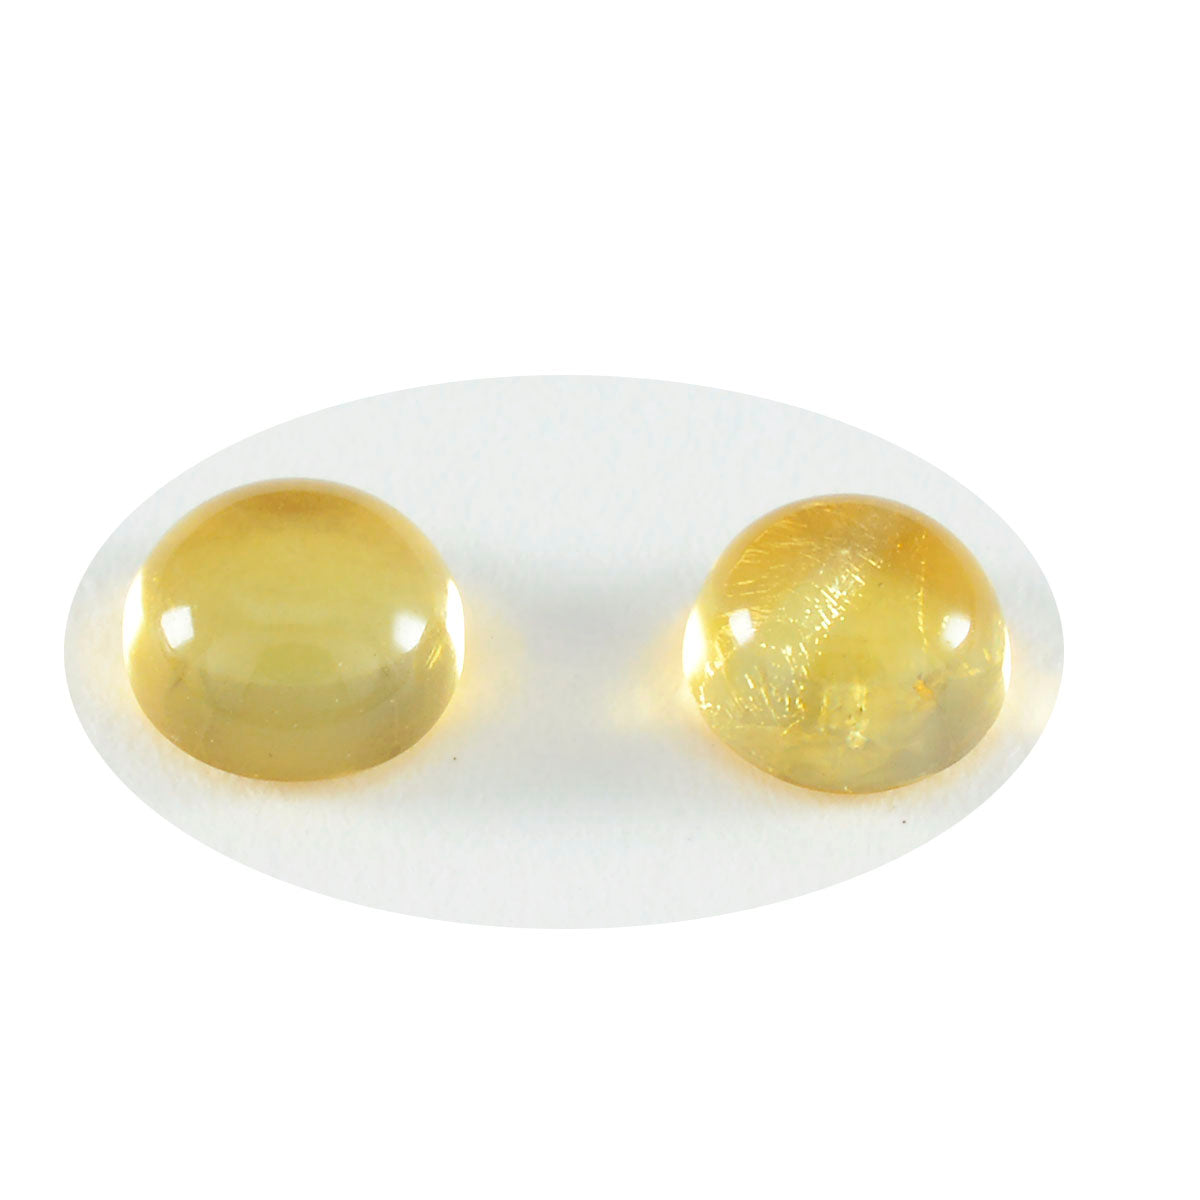 Riyogems 1PC Yellow Citrine Cabochon 15x15 mm Round Shape AA Quality Gemstone